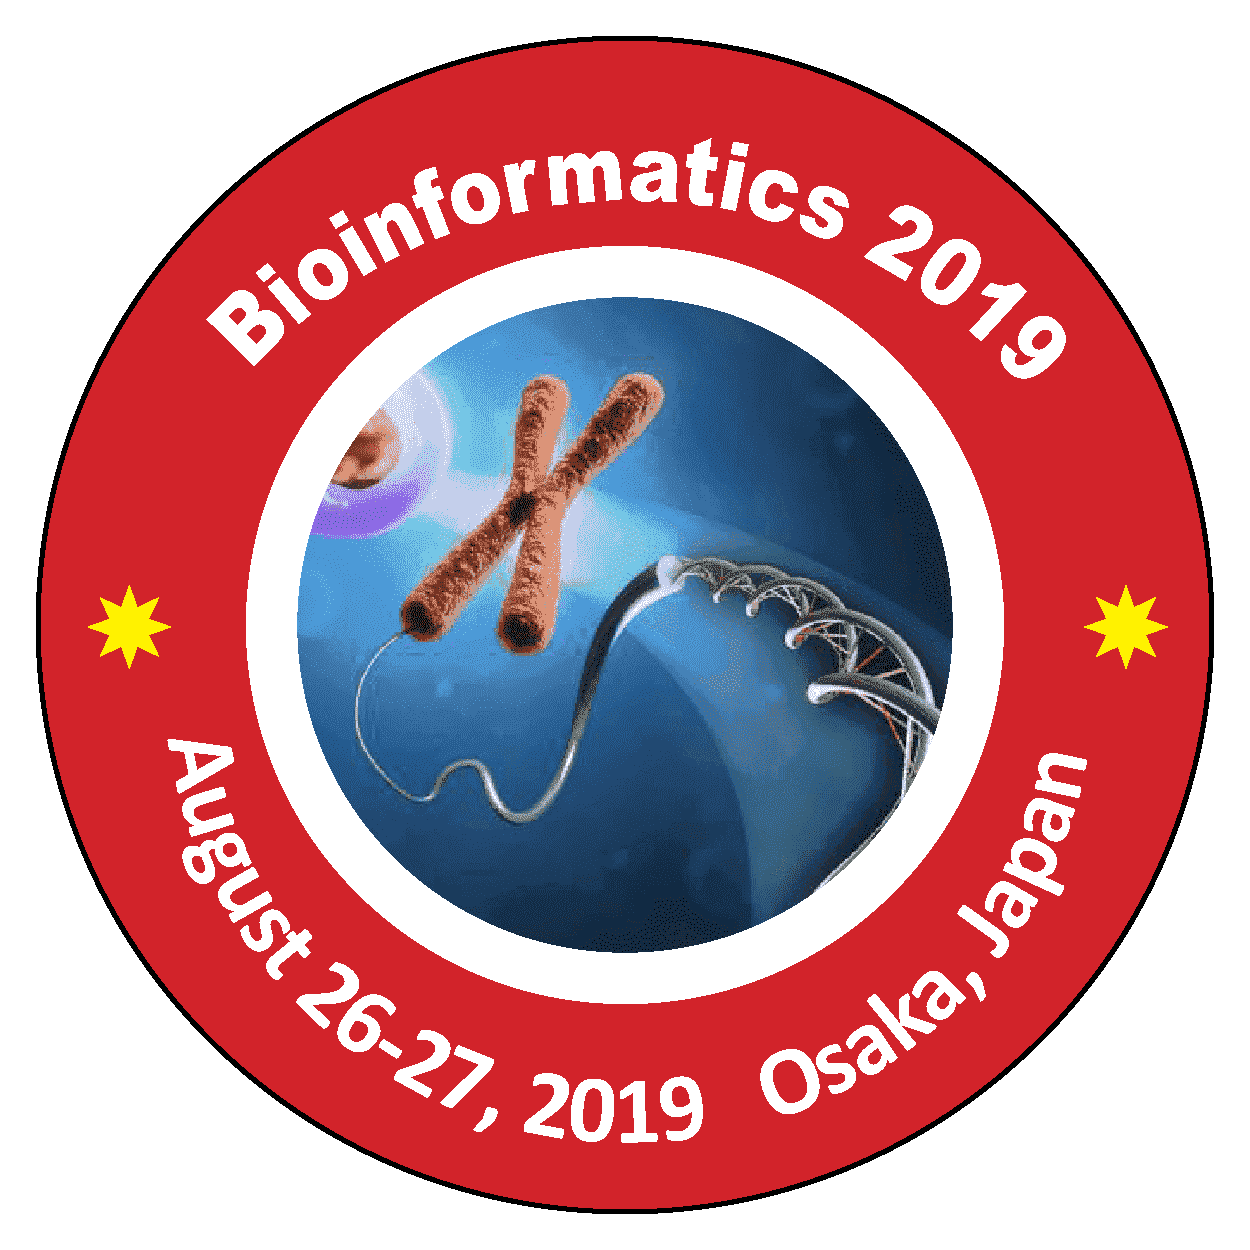 3rd World Congress on Bioinformatics & System Biology